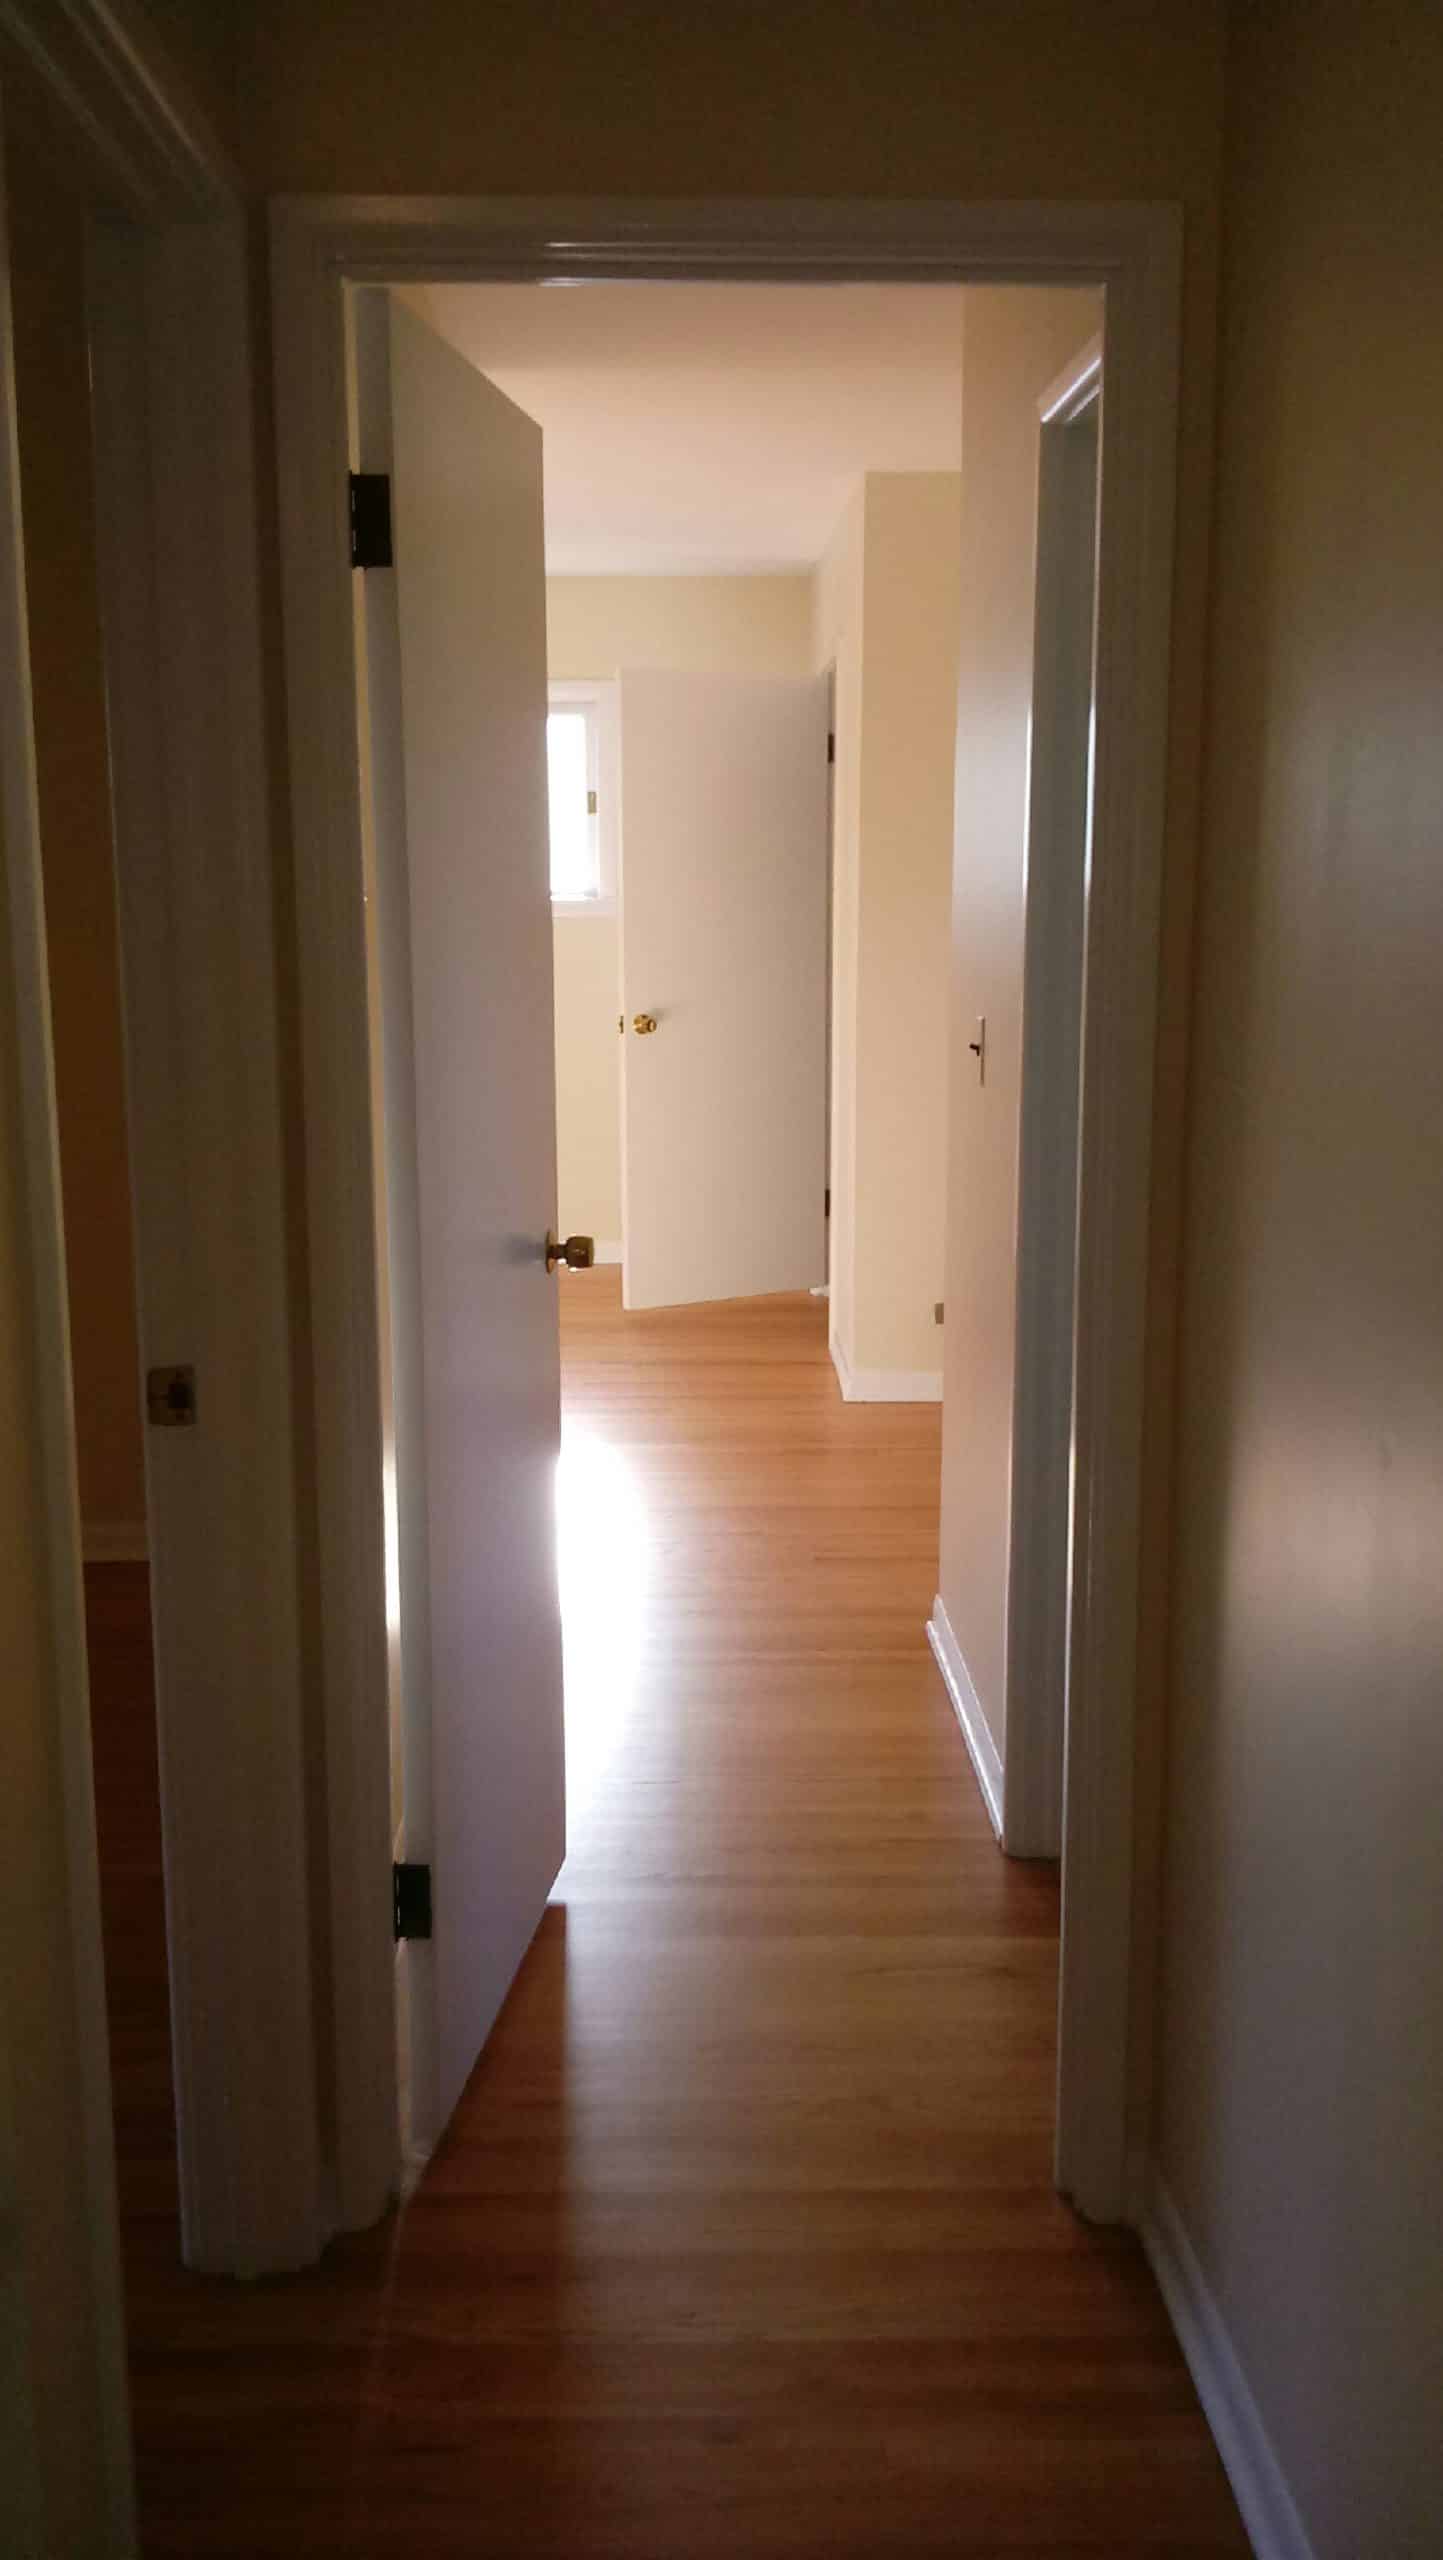 Narrow hallway leading into a room